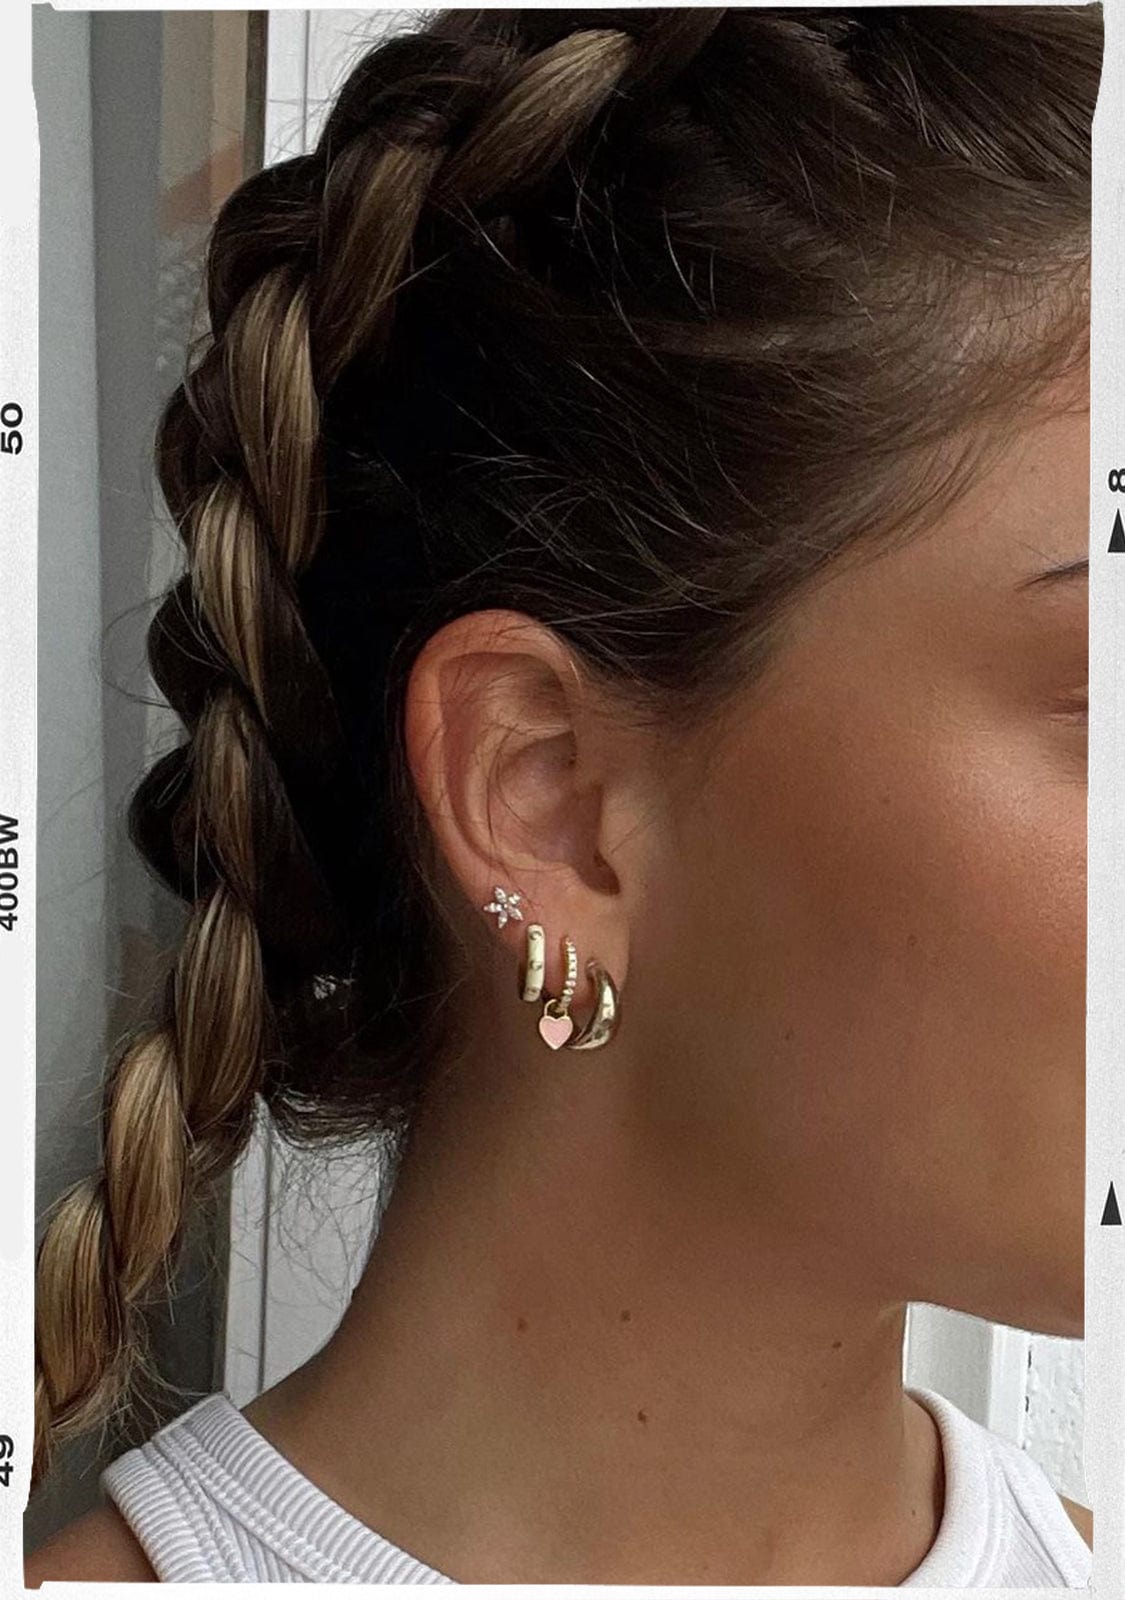 Ear Piercing Flore Gold